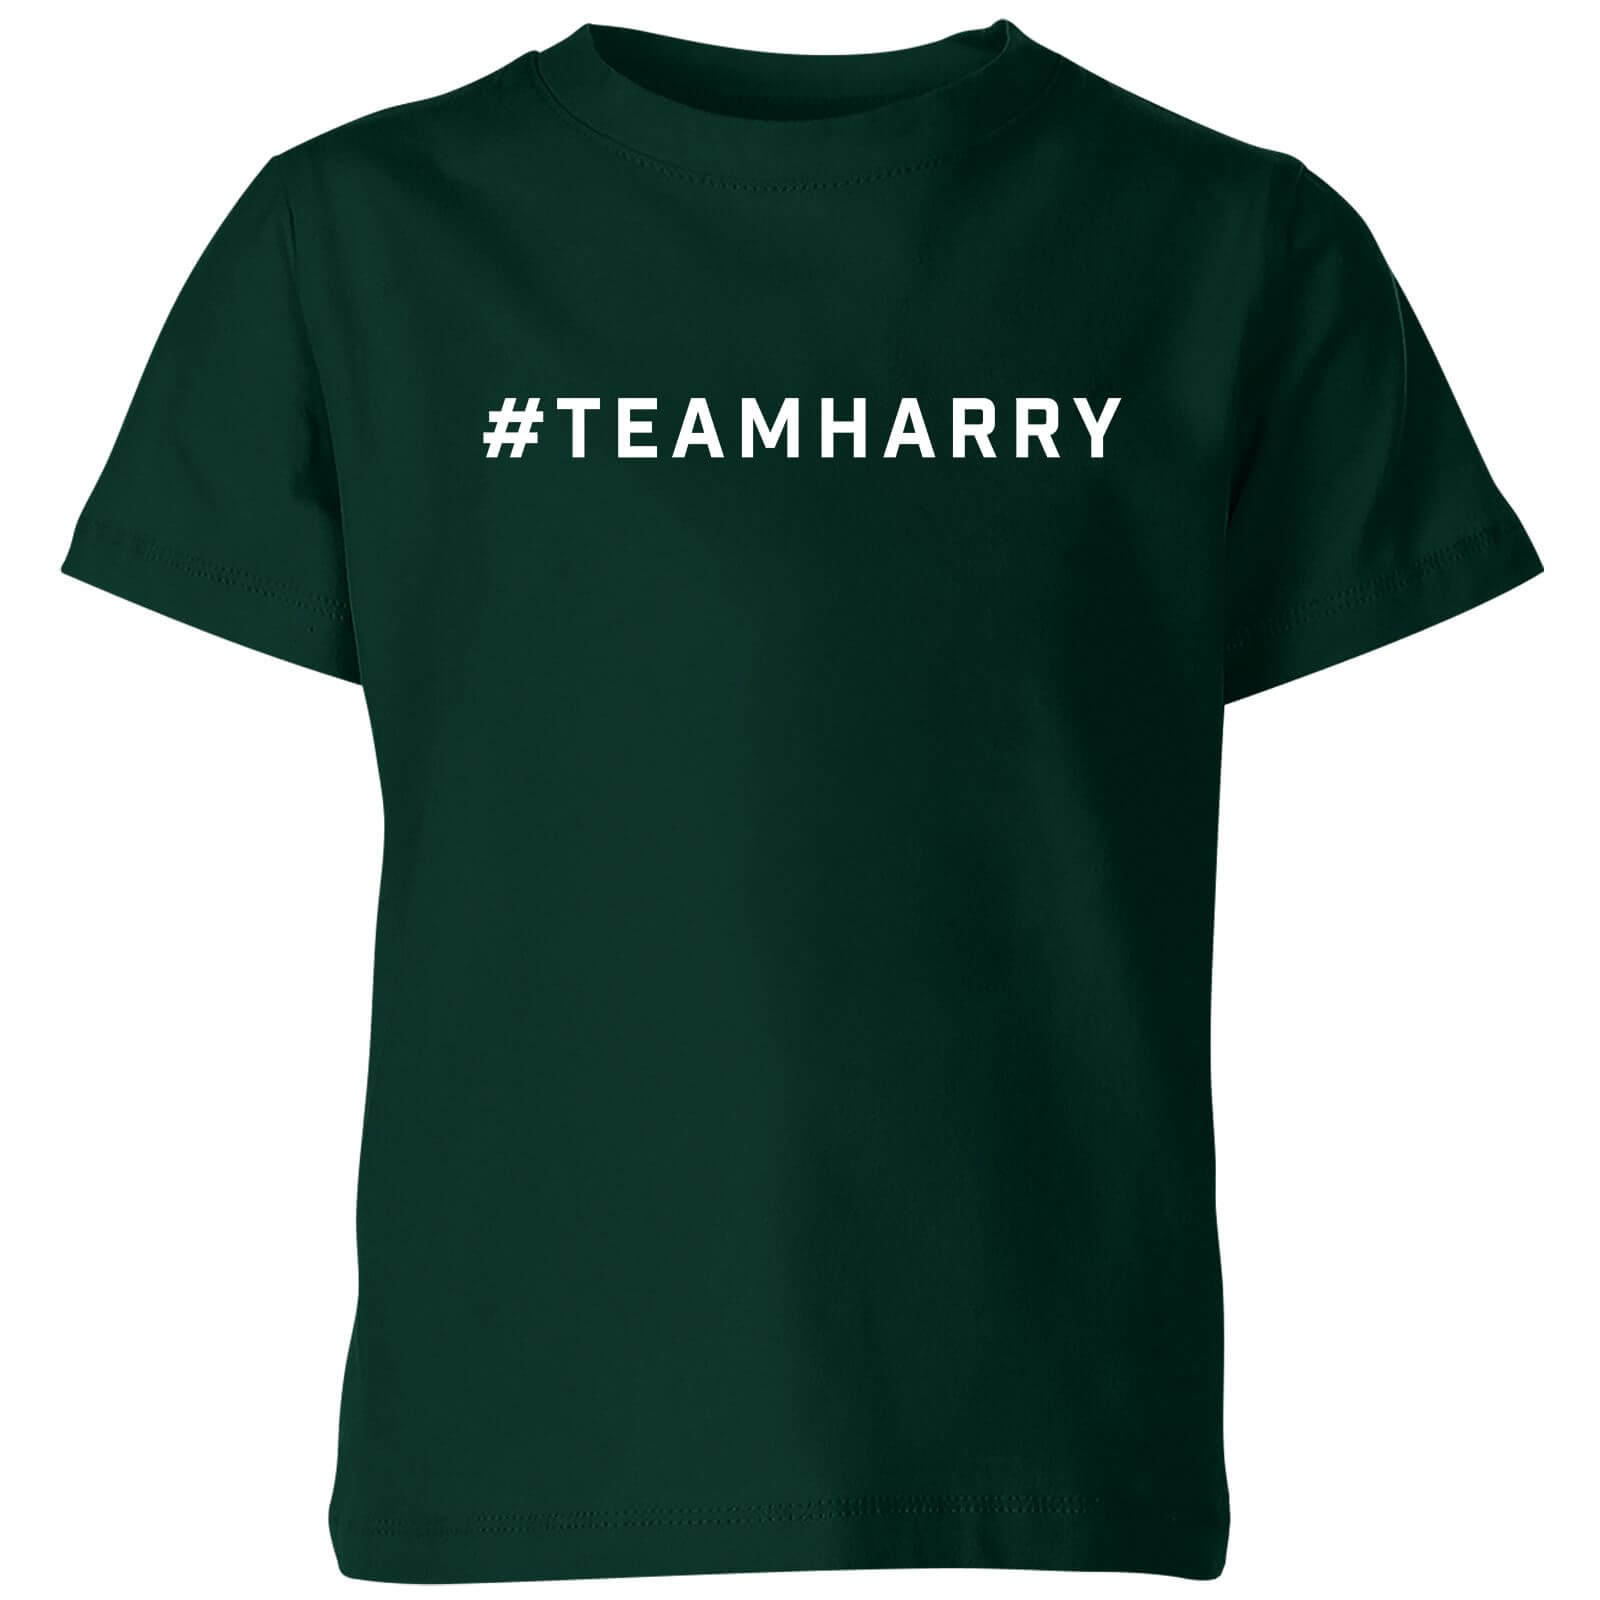 #TeamHarry Kids' T-Shirt - Forest Green - 7-8 Years - Forest Green